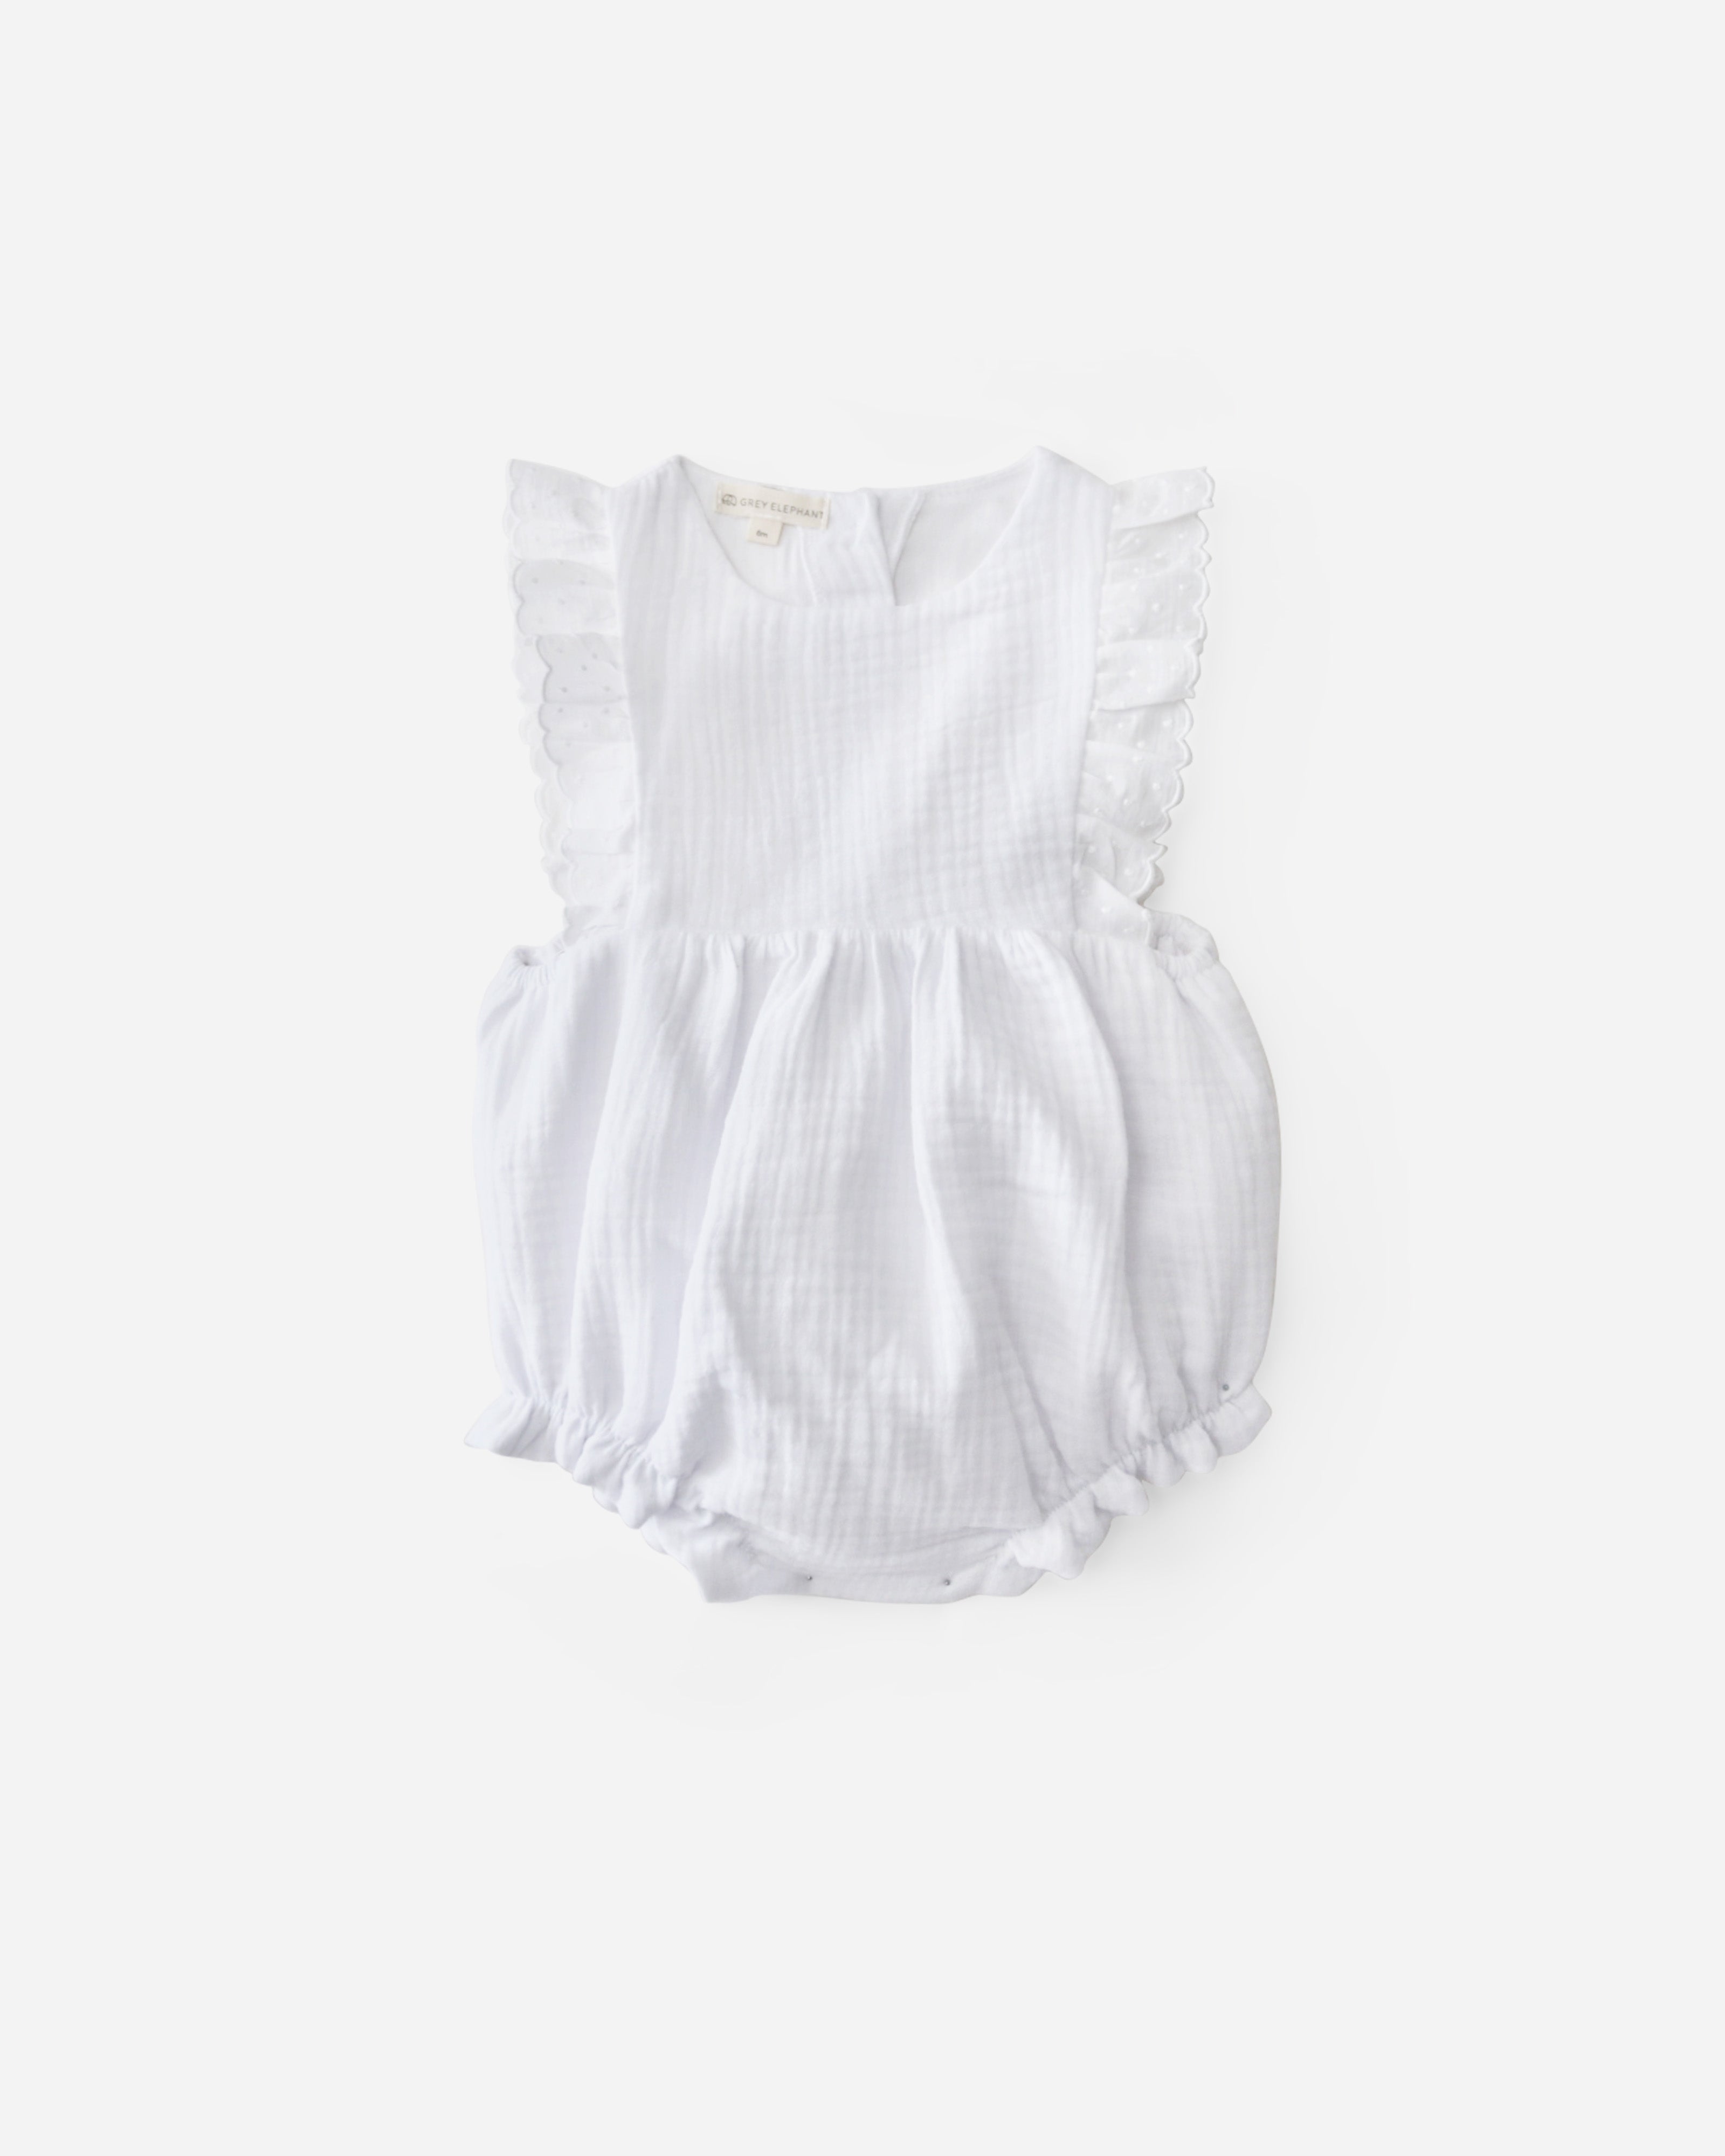 Grey Elephant - Shop Timeless baby clothes